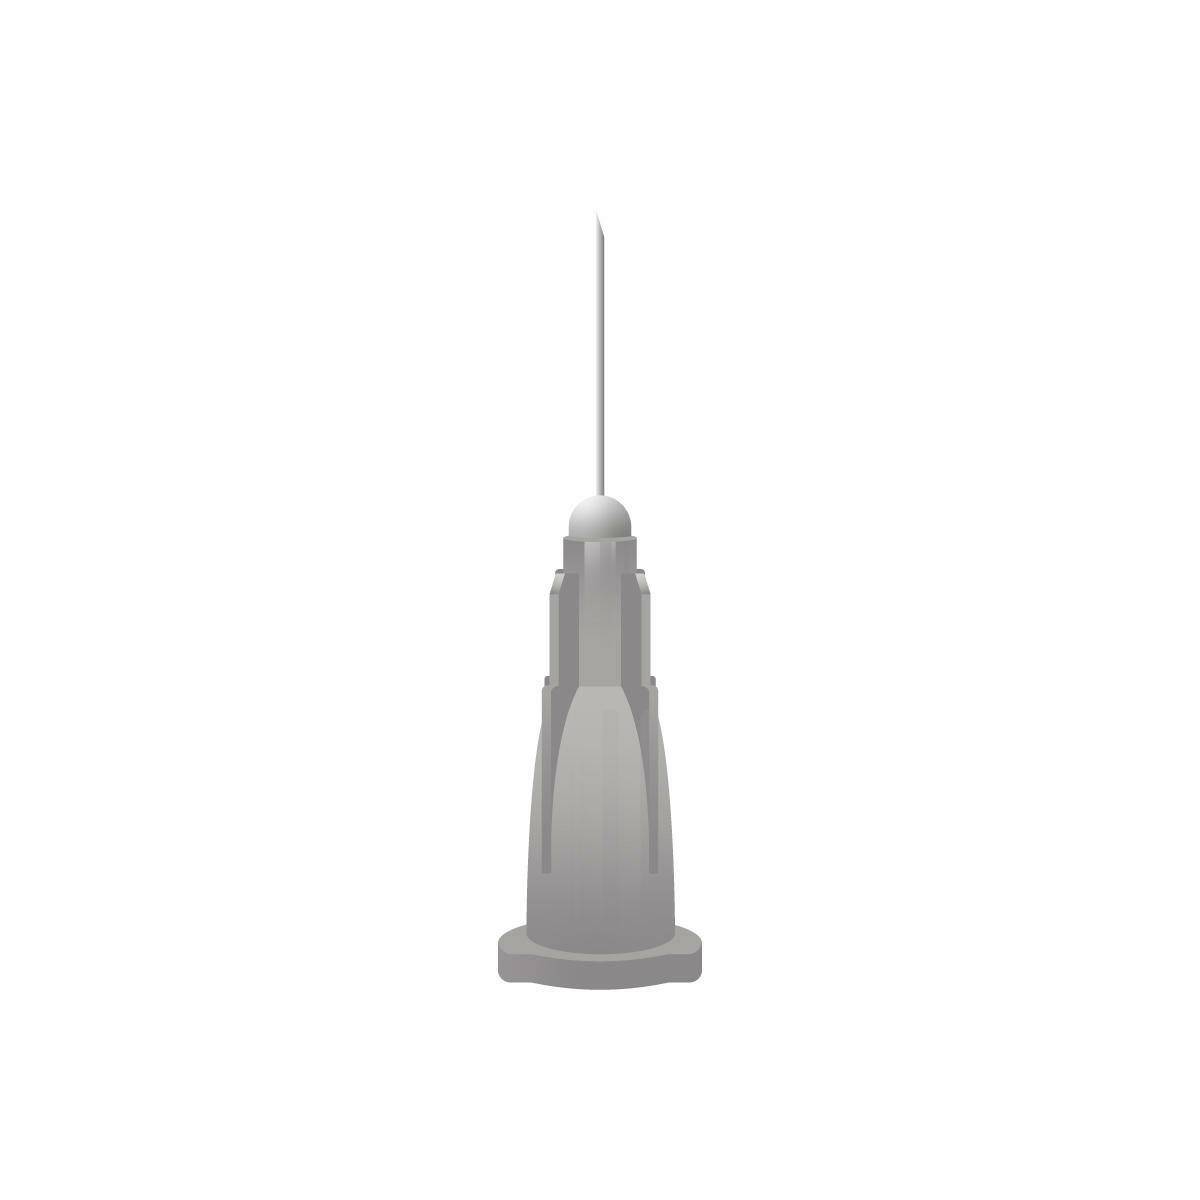 27g 12mm Meso-relle Extra ThinWall Needle - UKMEDI